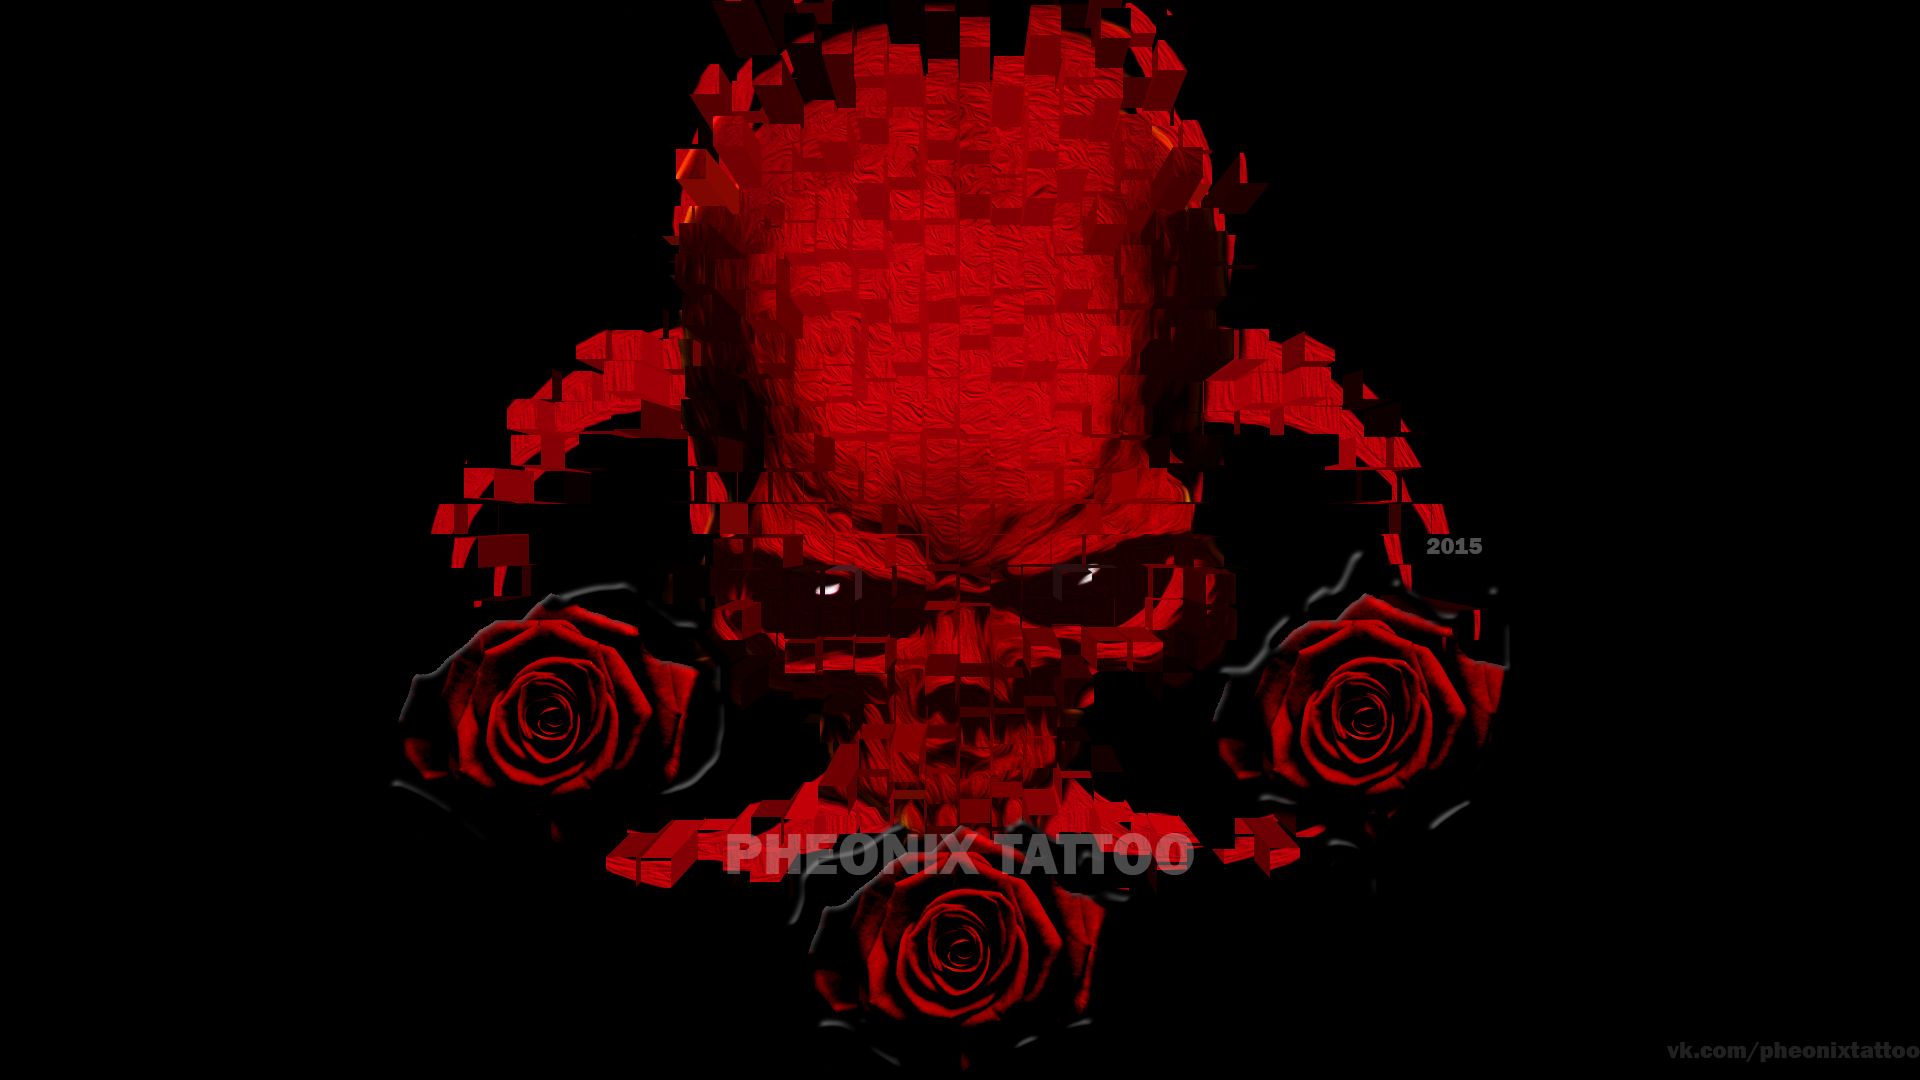 Wallpapers skull red rose on the desktop